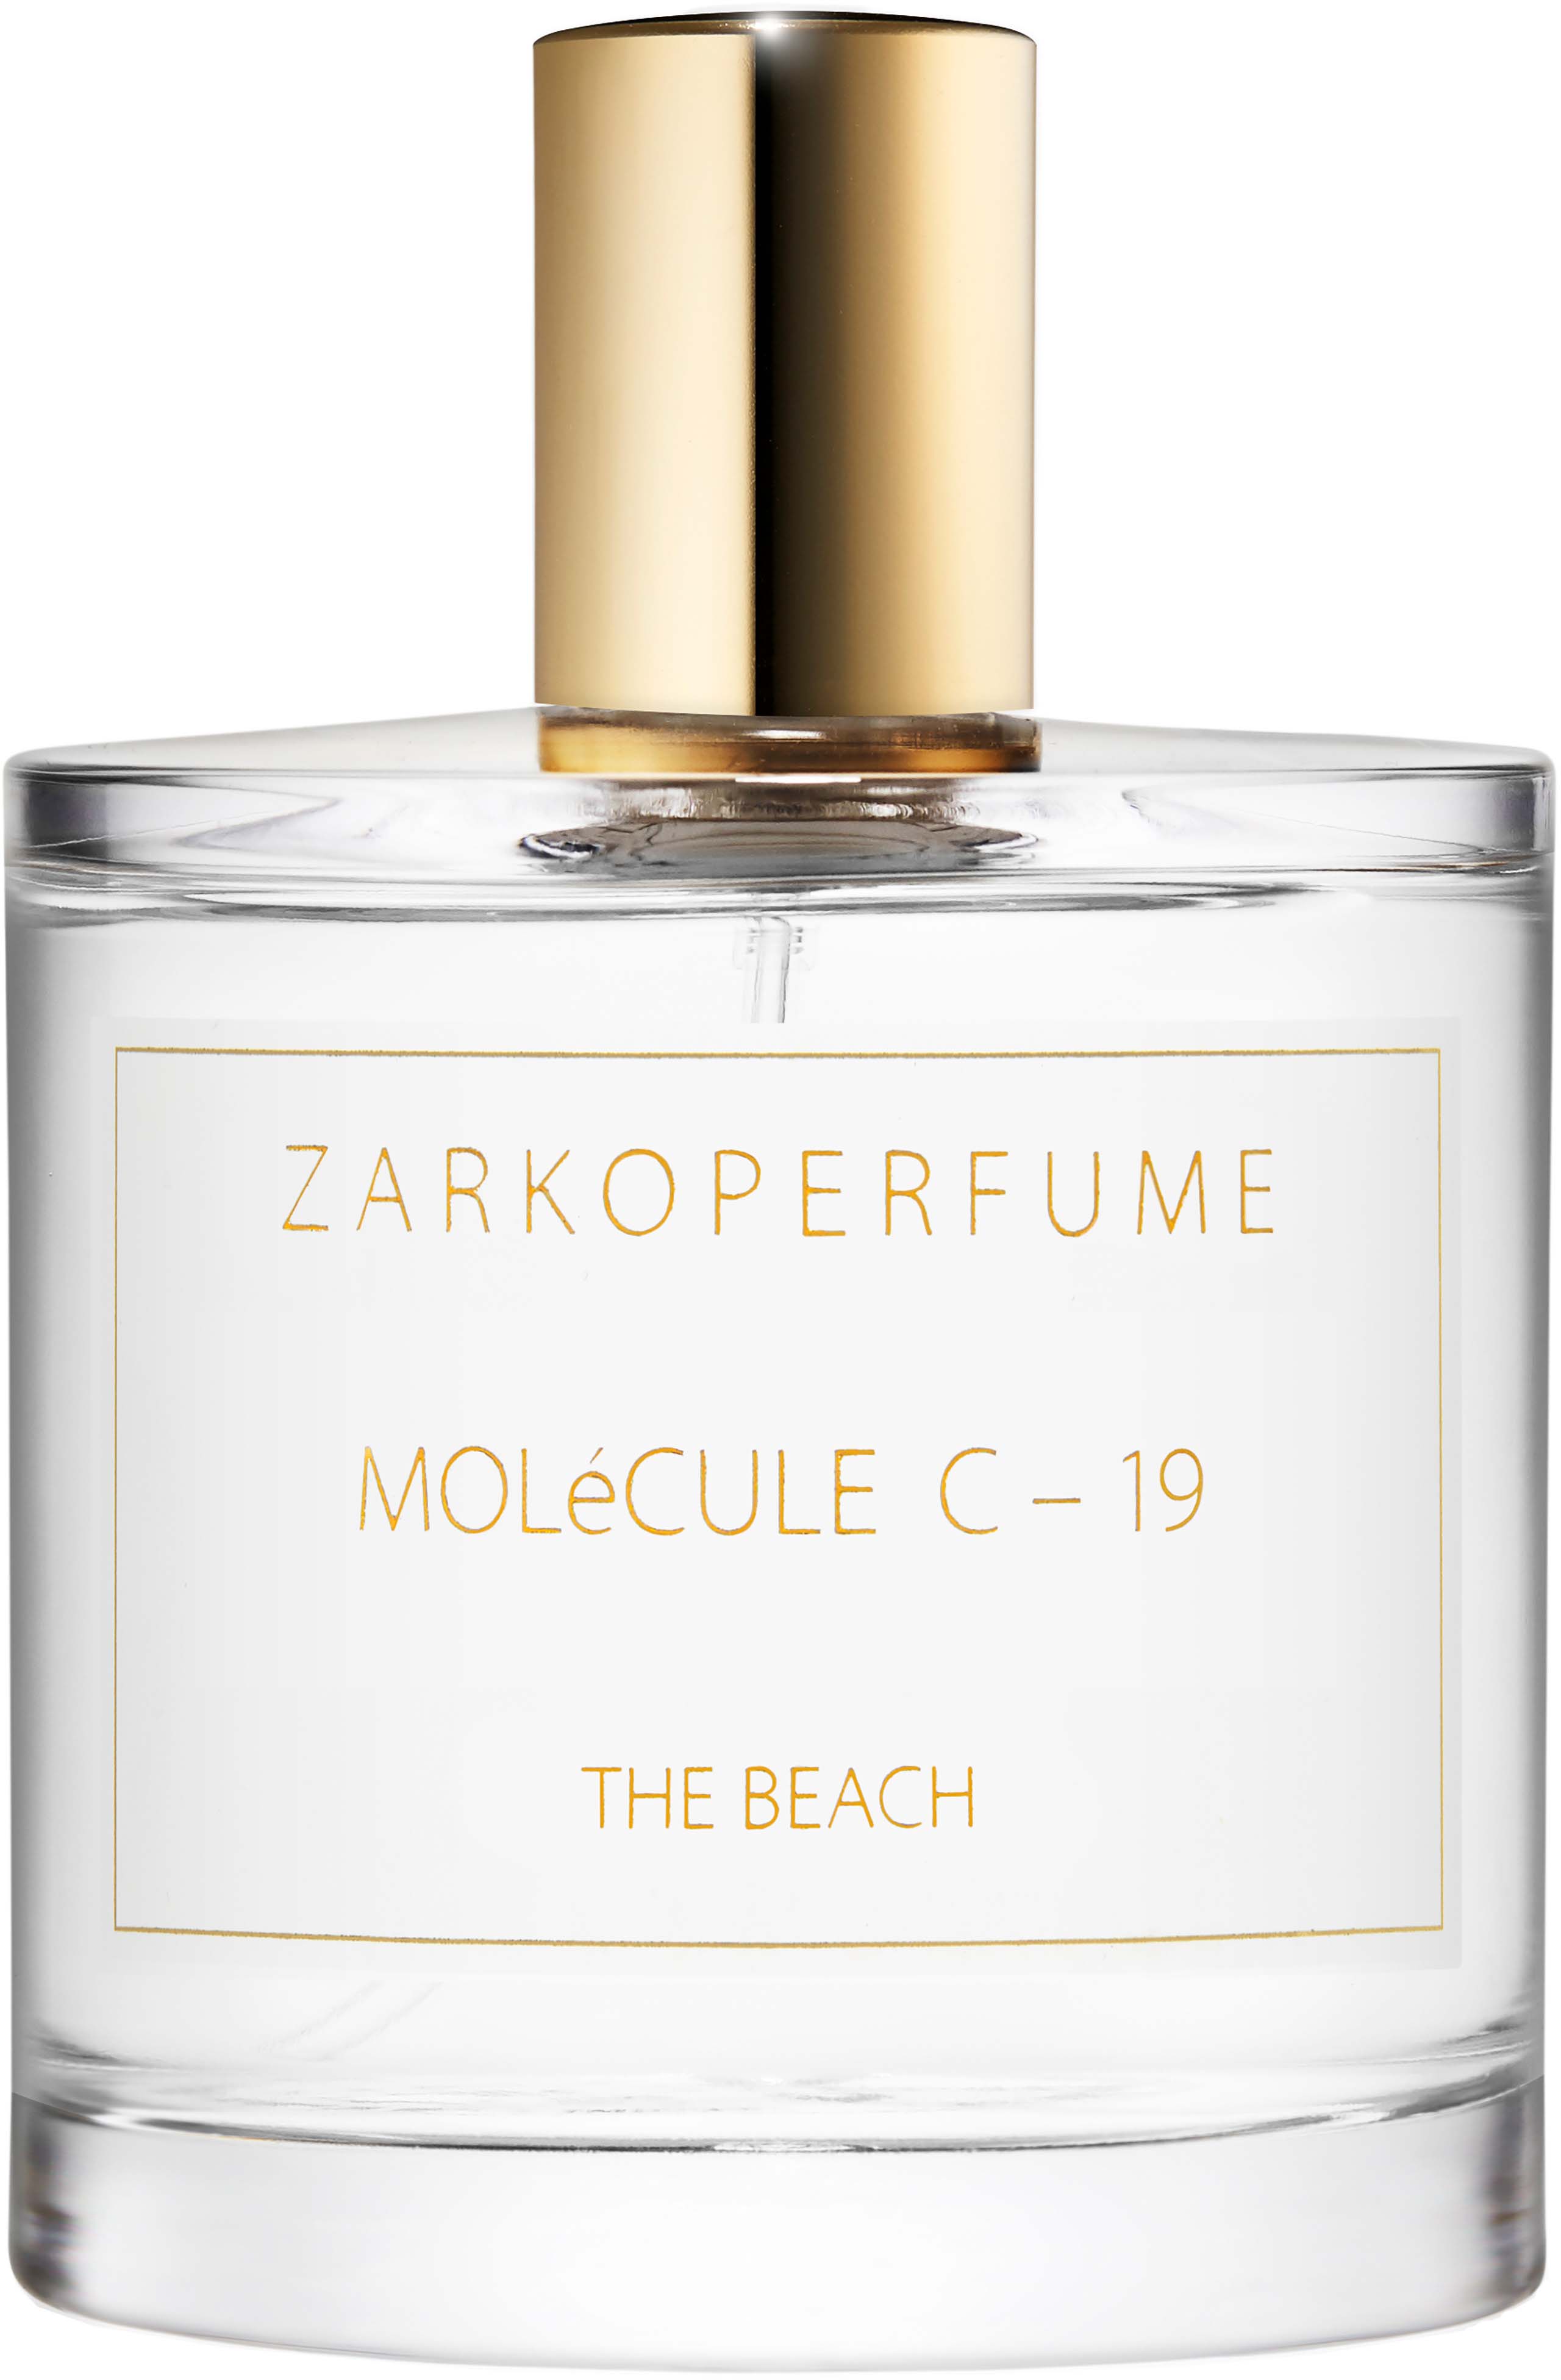 zarkoperfume molecule c-19 - the beach